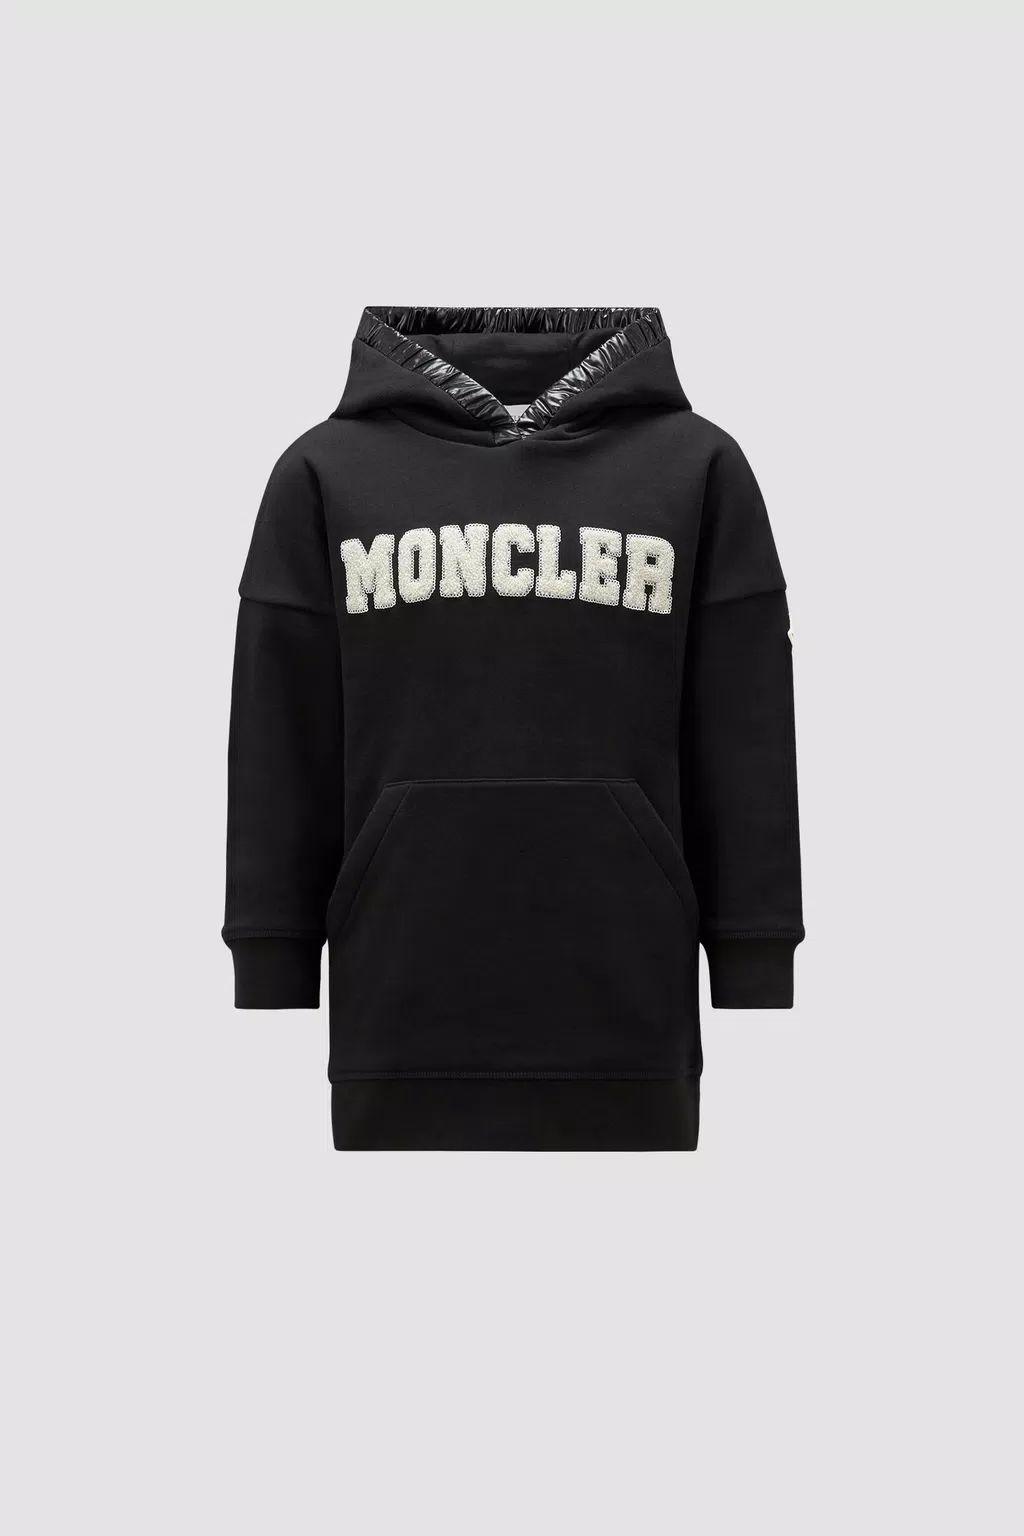 moncler.com | Hooded Sweatshirt Dress